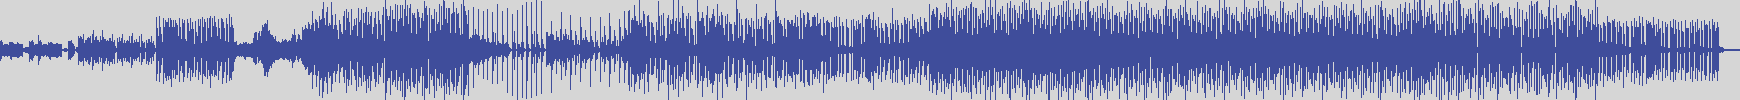 nf_boyz_records [NFY089] Ultradeep - Mothership [The Room Mix] audio wave form